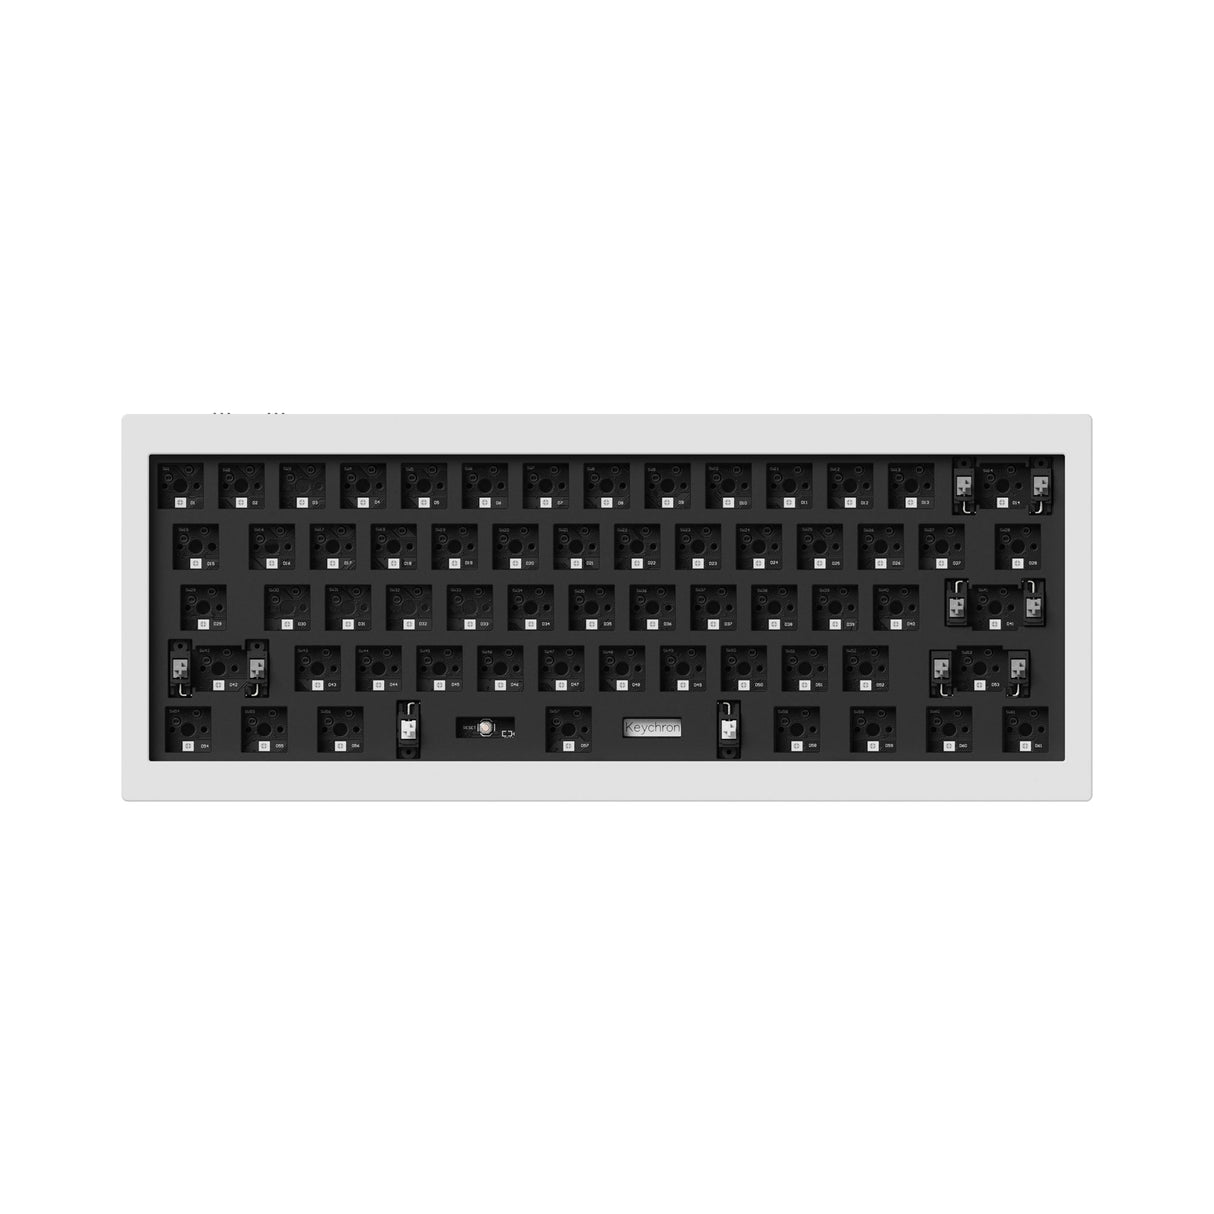 Keychron Q4 Pro QMK/VIA wireless custom mechanical keyboard 60 percent layout full aluminum white frame for Mac WIndows Linux with RGB backlight and hot-swappable barebone